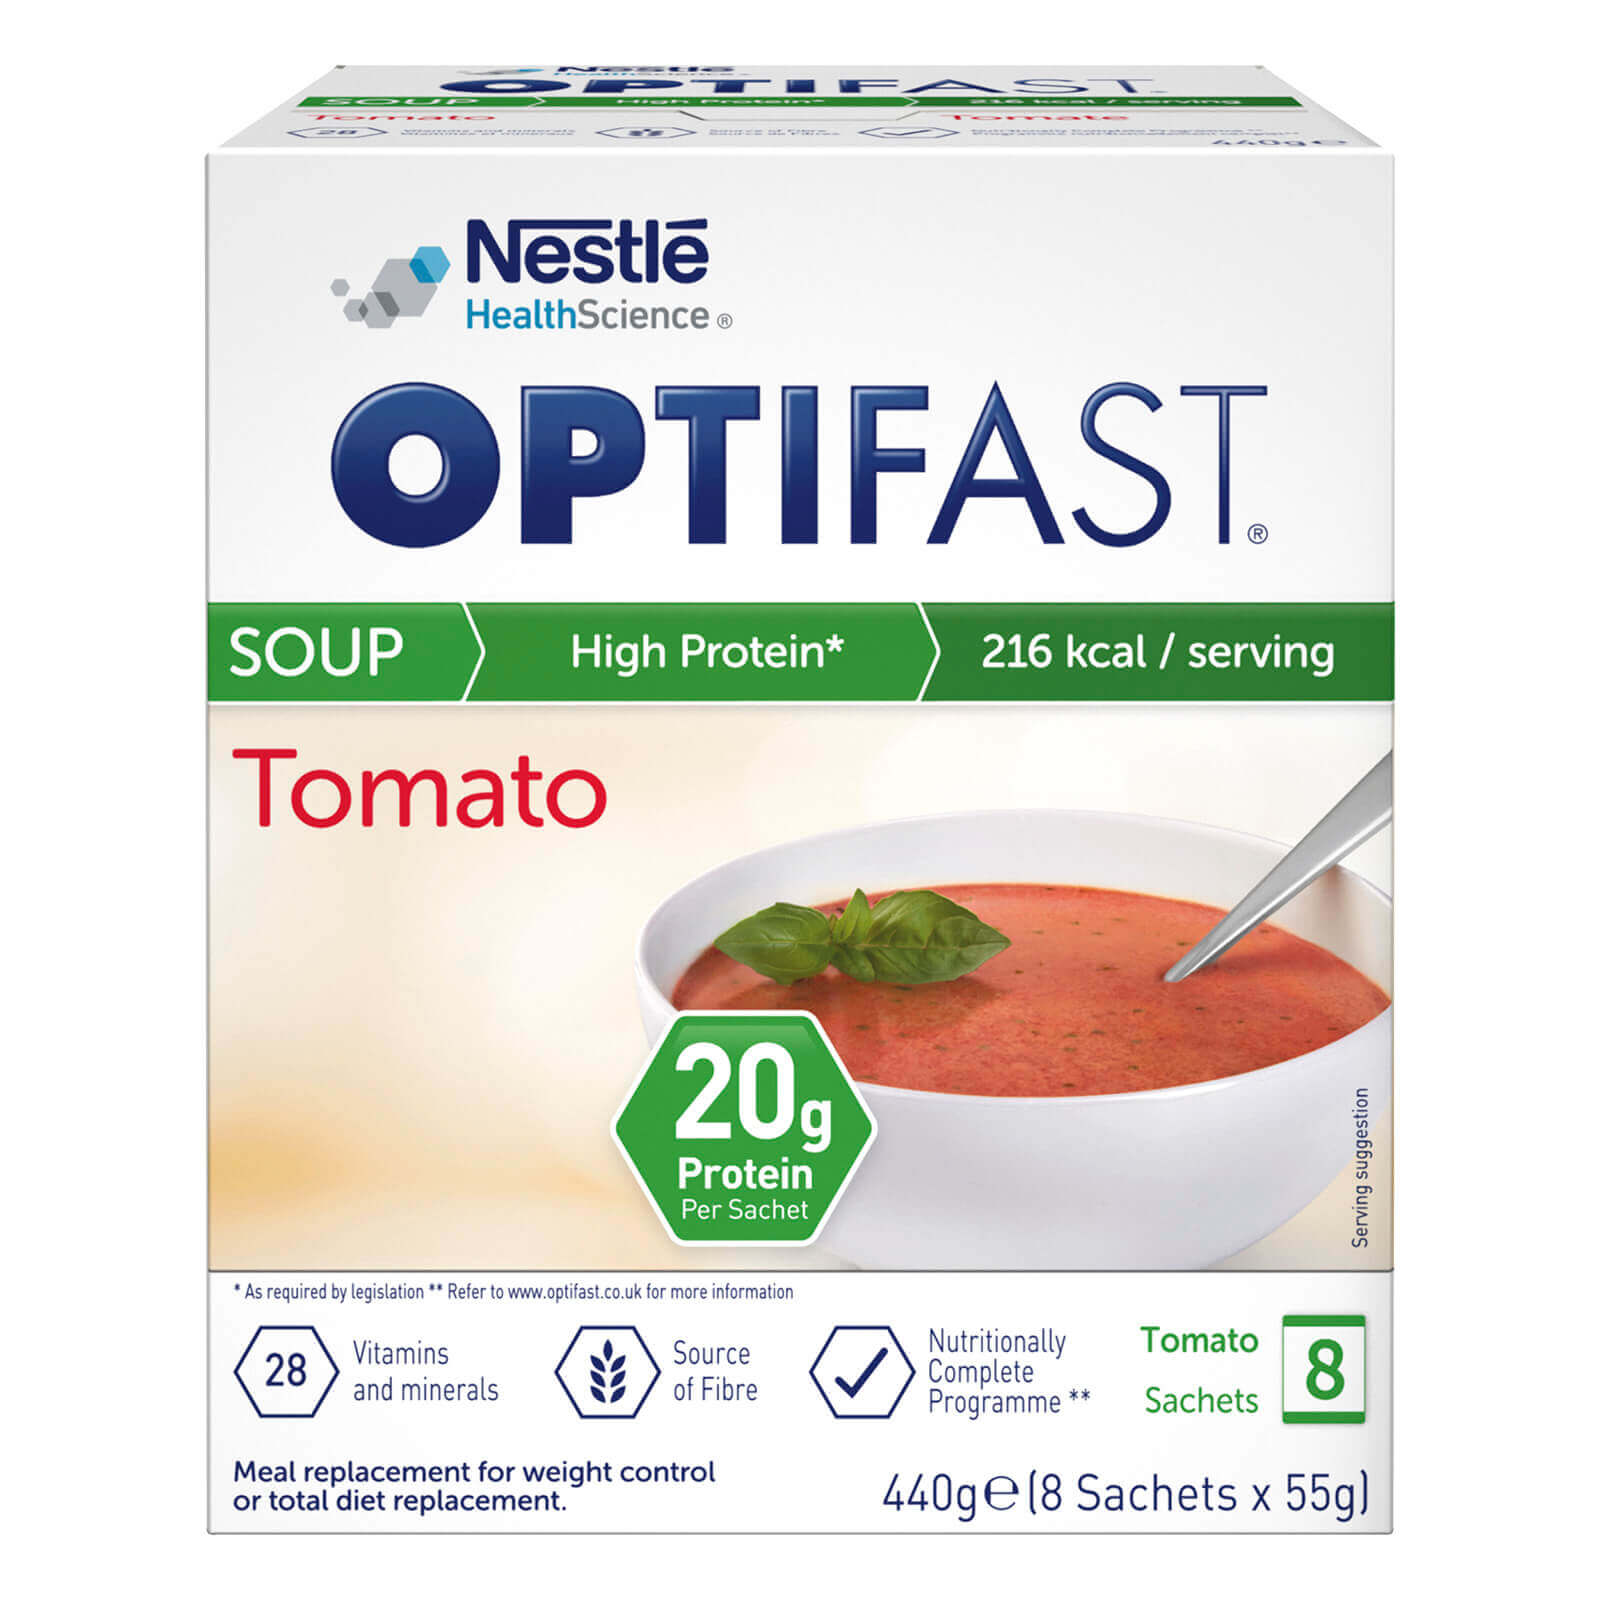 OPTIFAST Soup - Tomato